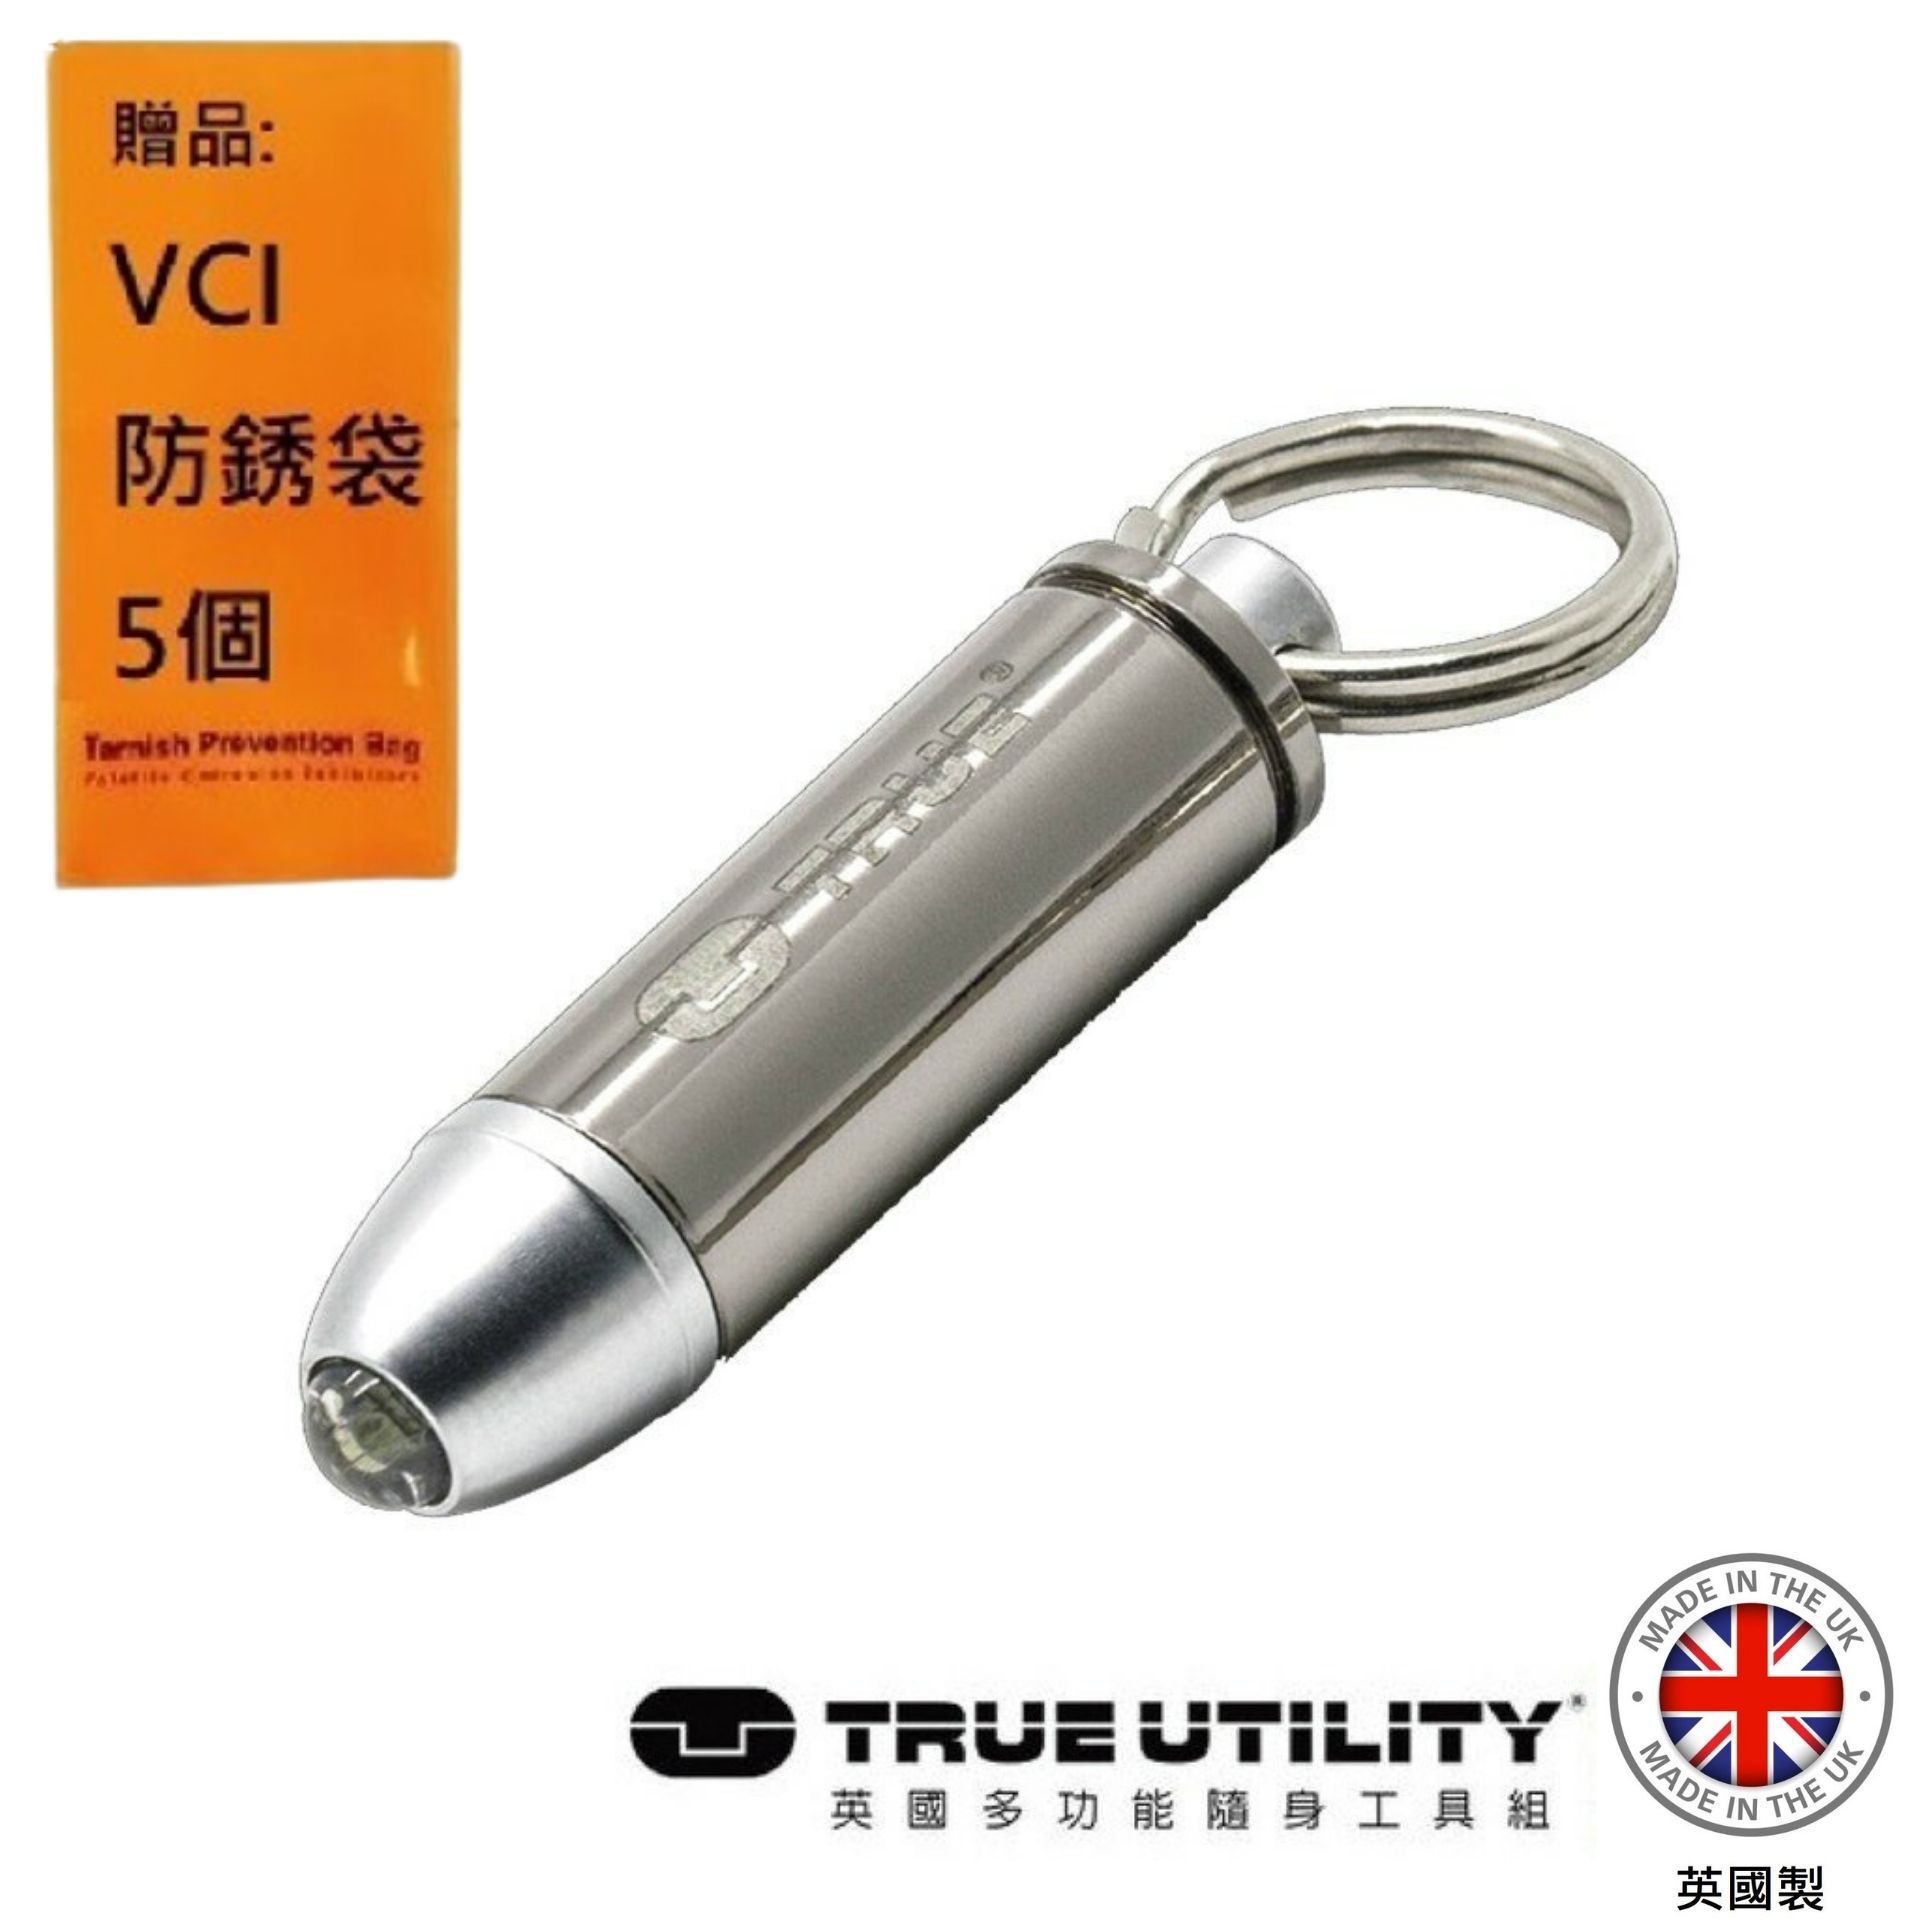 【TRUE UTILITY】英國多功能子彈型手電筒鑰匙圈 可搭配吊掛在鑰匙圈，或是包包和衣服上